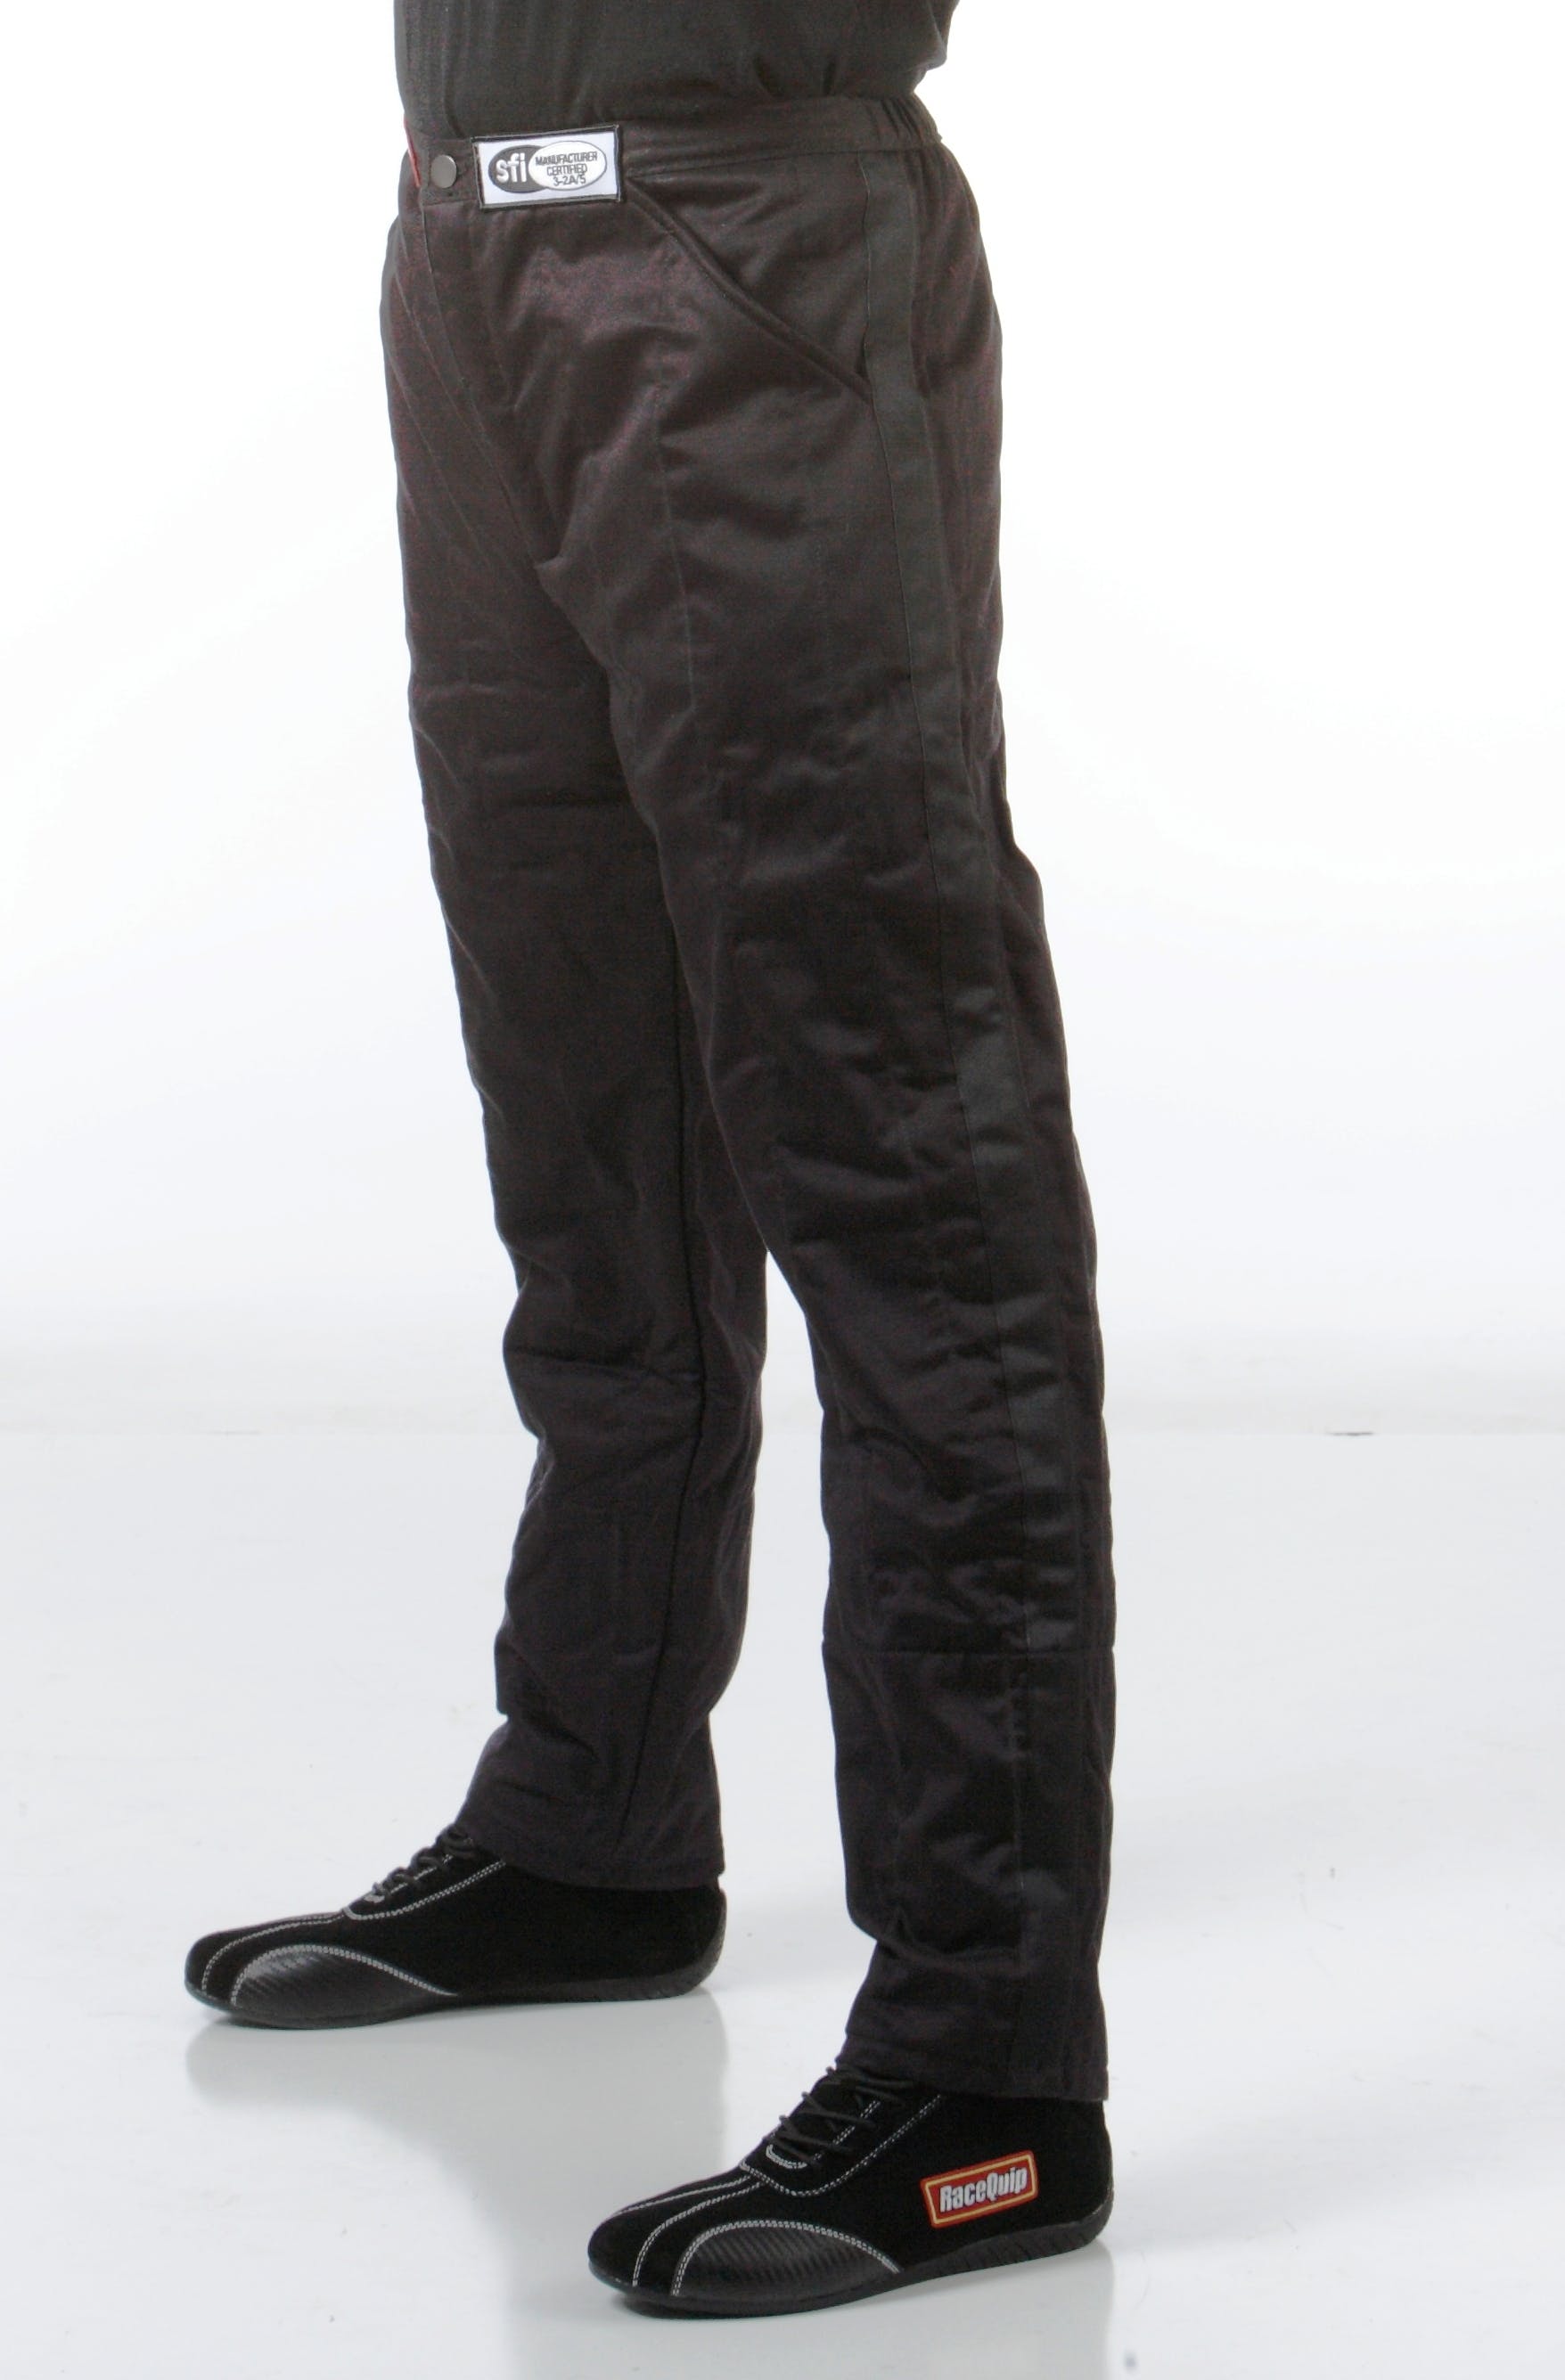 RaceQuip 122008 SFI-5 Pyrovatex Multi-Layer Racing Fire Pants (Black, 3X-Large)